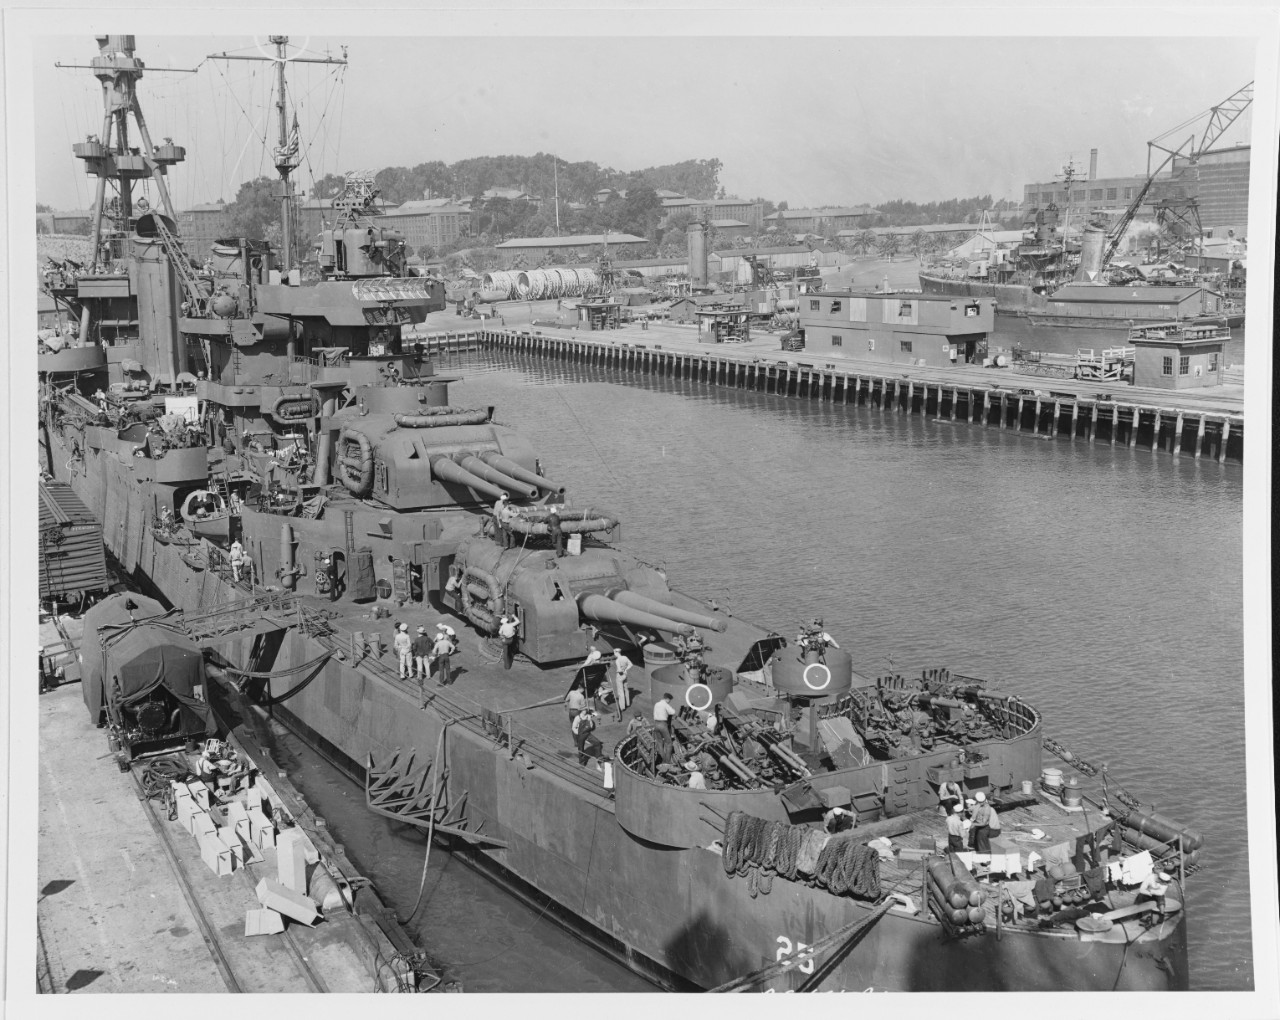 Blueprints > Ships > Cruisers (US) > USS CA-25 Salt Lake City (Heavy  Cruiser) (1944)